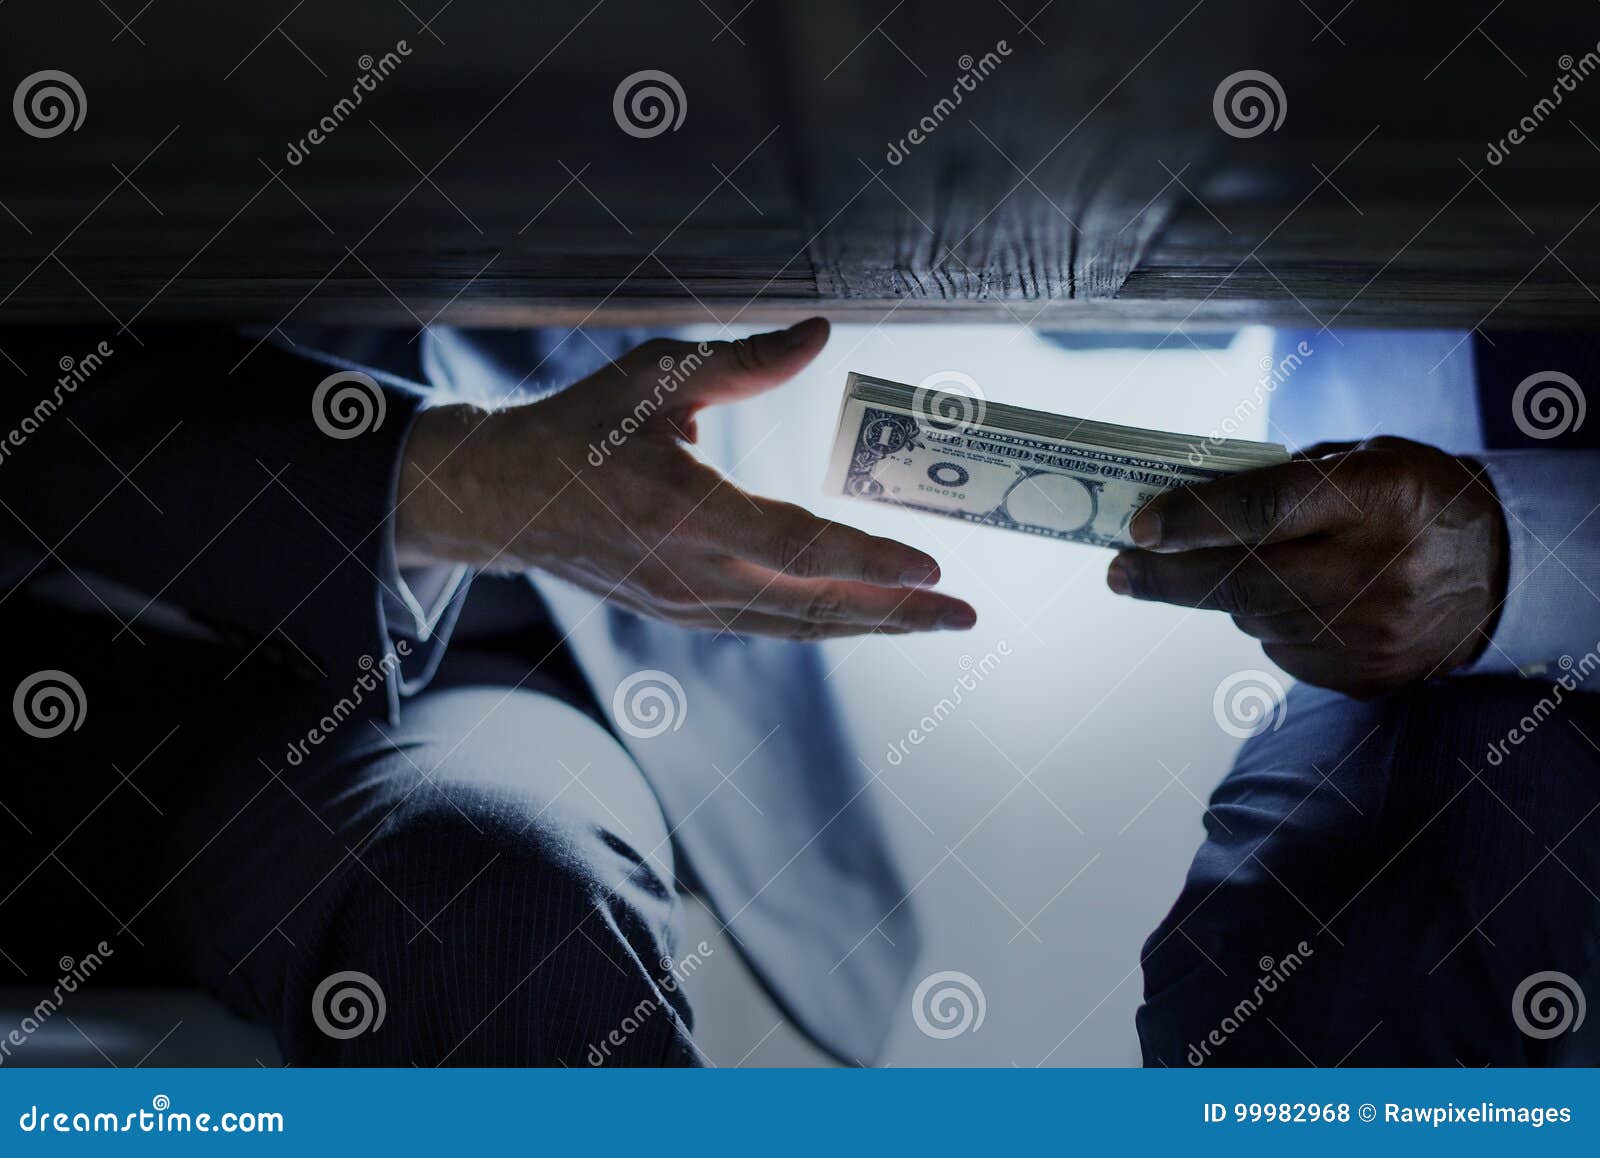 hands passing money under table corruption bribery